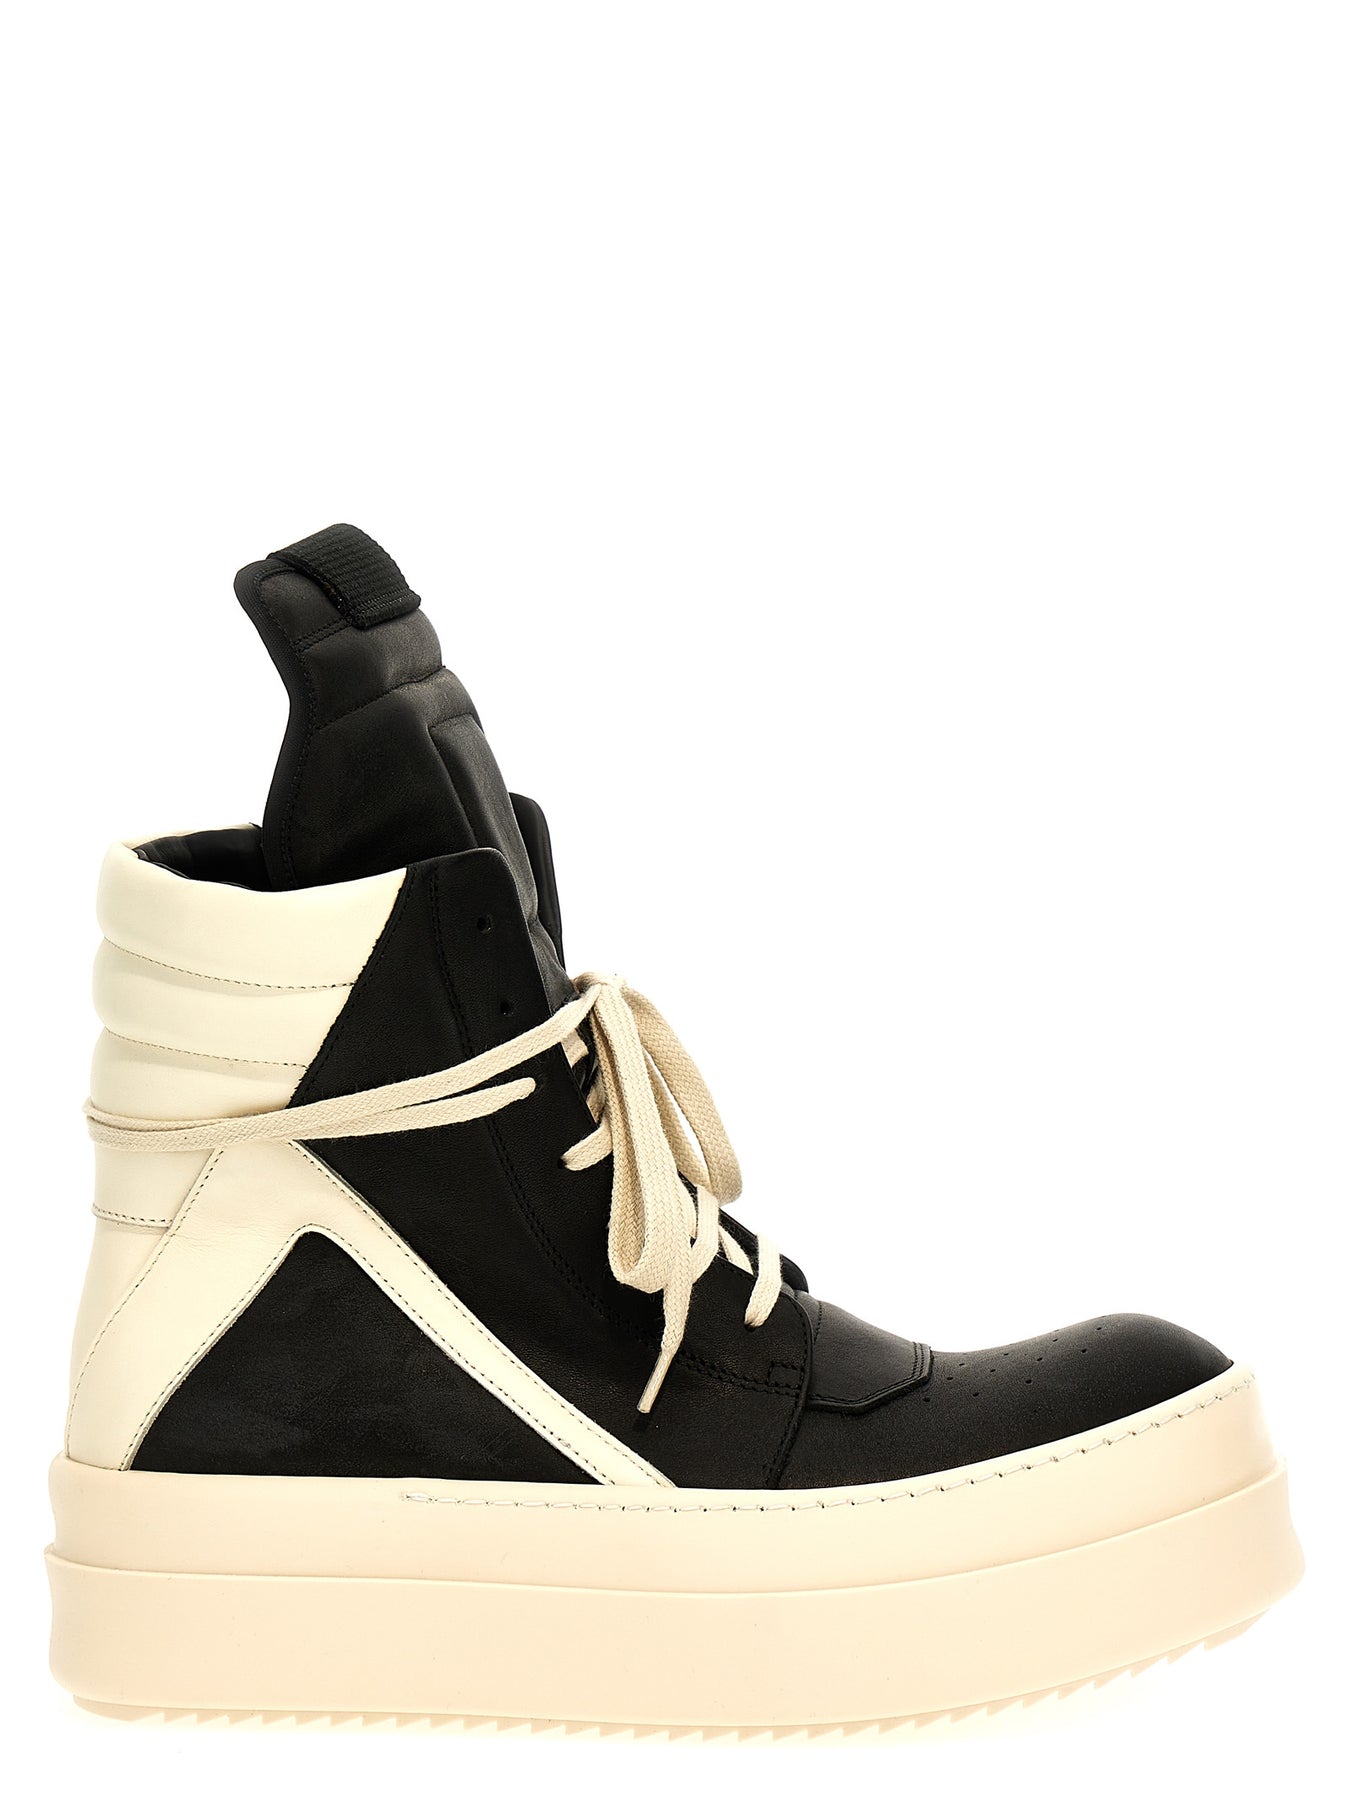 Rick Owens Mega Bumper Geobasket Sneakers White/Black - Wanan Luxury